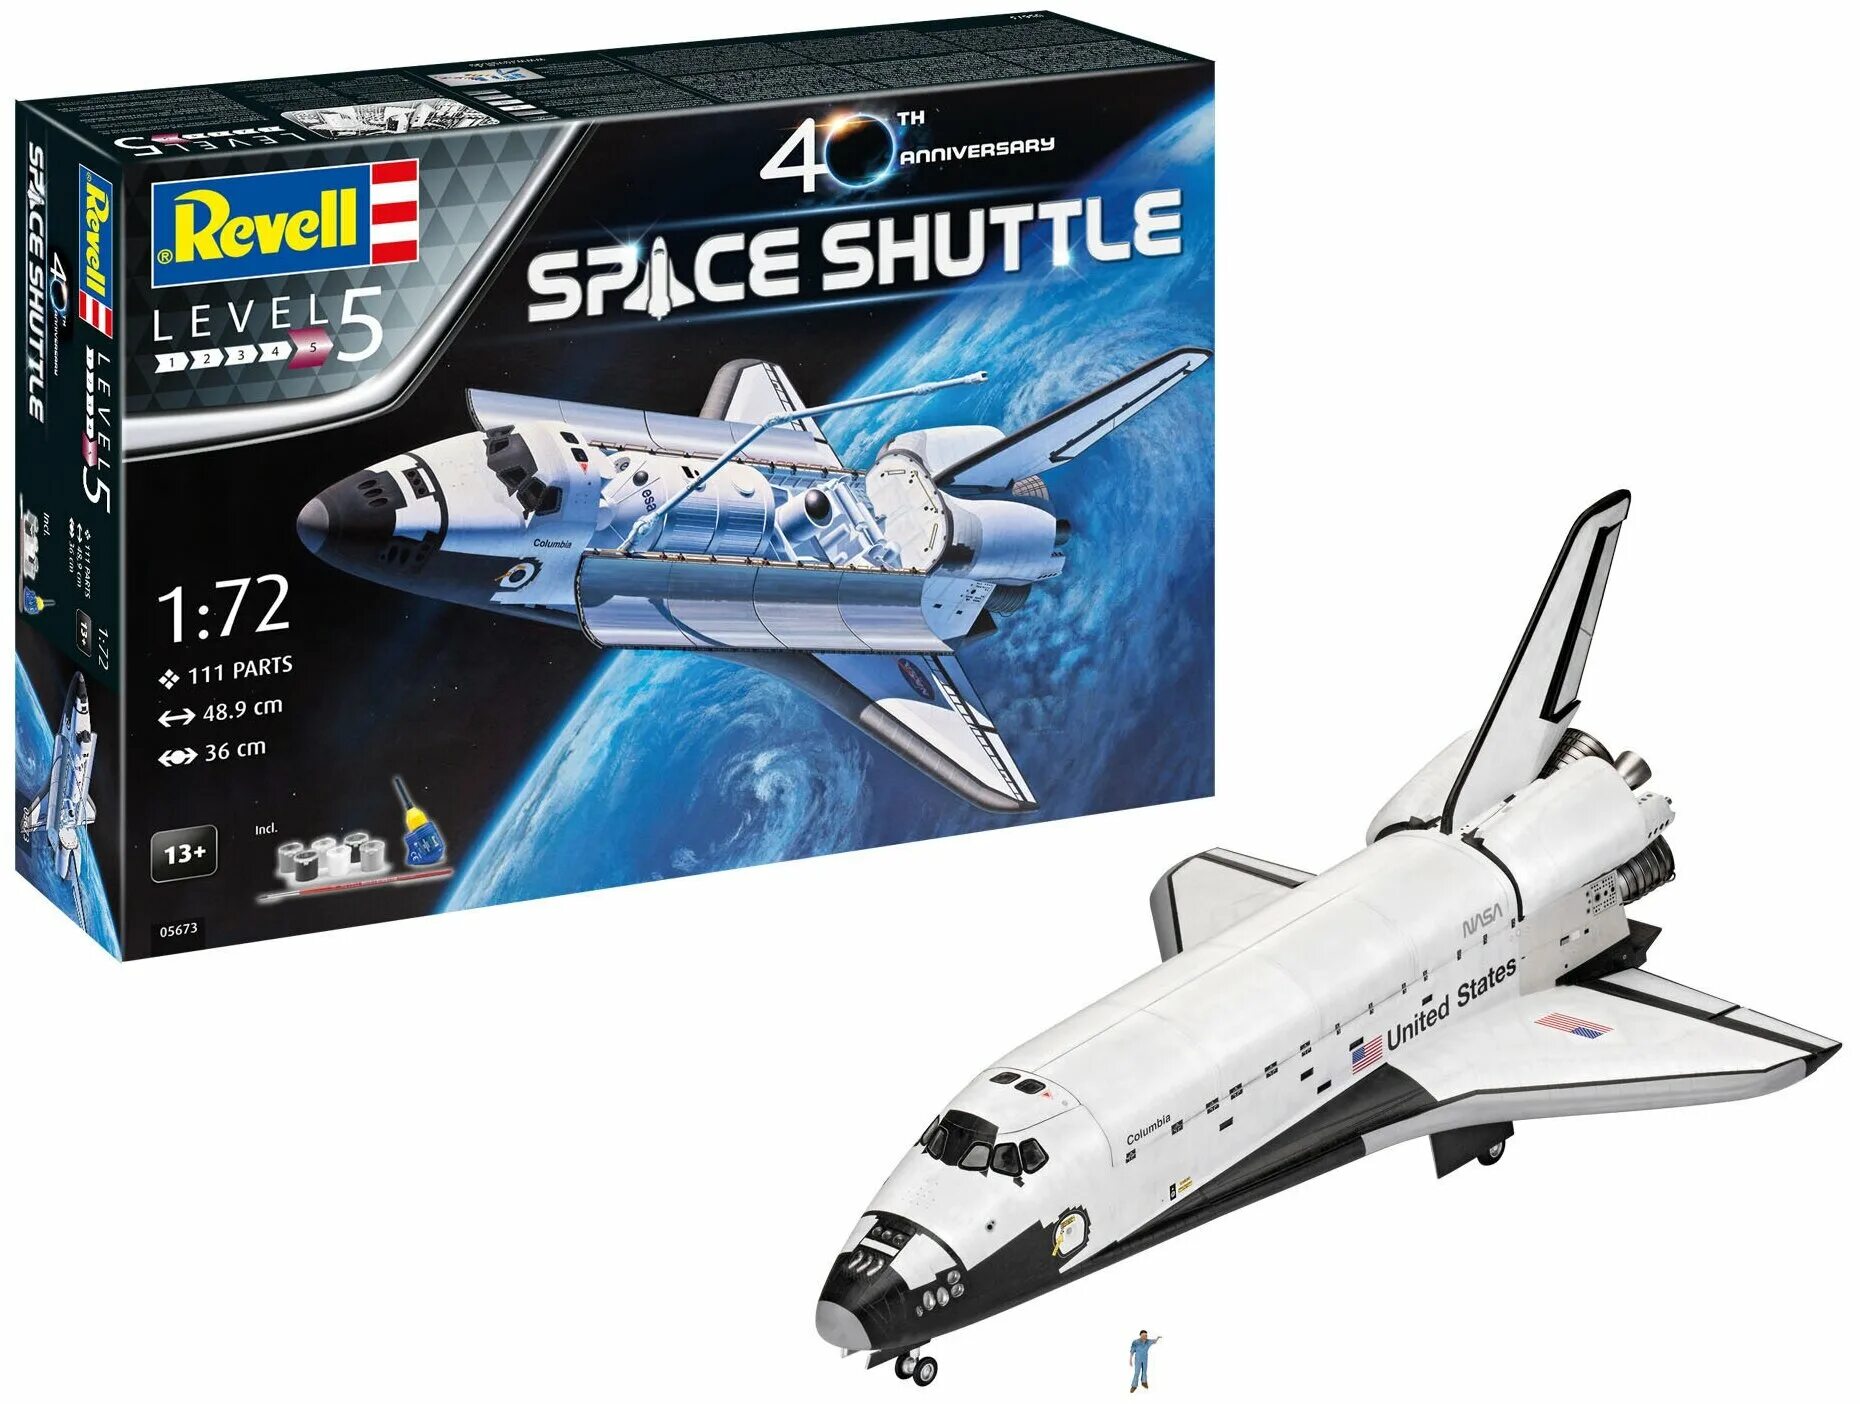 Shuttle отзывы. 05673re подарочный набор космический Шатл 40th Anniversary Revell, 1/72. Revell Space Shuttle 1/72. Revell сборная модель космический шаттл. Шаттл Спейс Дискавери модель Ревелл 1/72 инструкция.